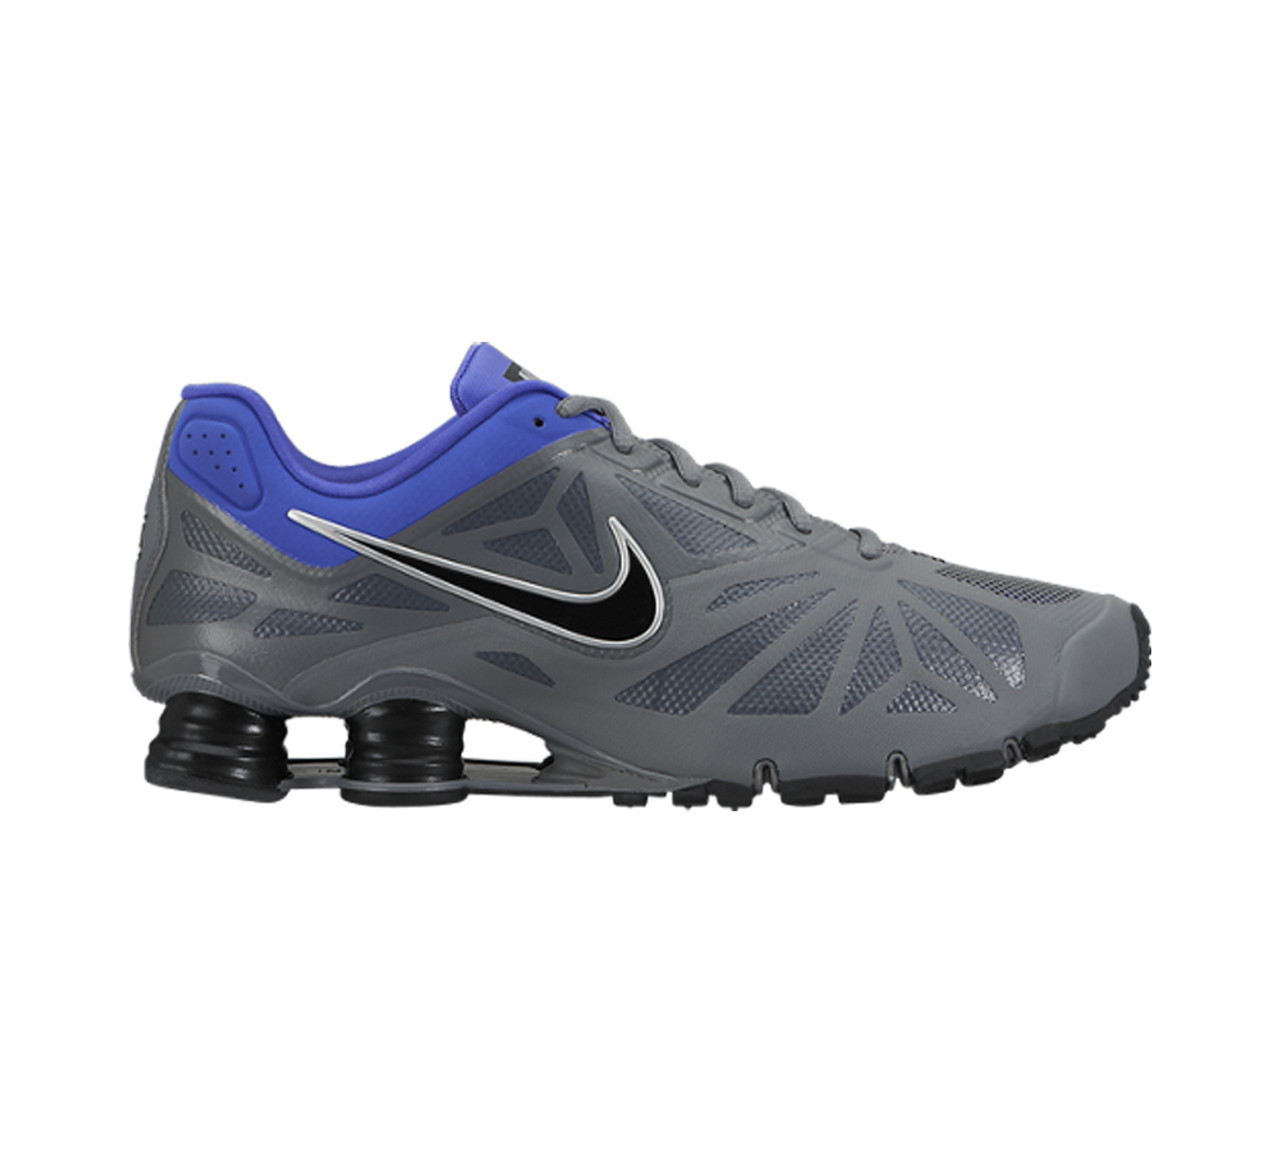 Nike Shox Turbo 14 Running Shoe Grey | Discount Nike Men's Athletic & More - Shoolu.com Shoolu.com